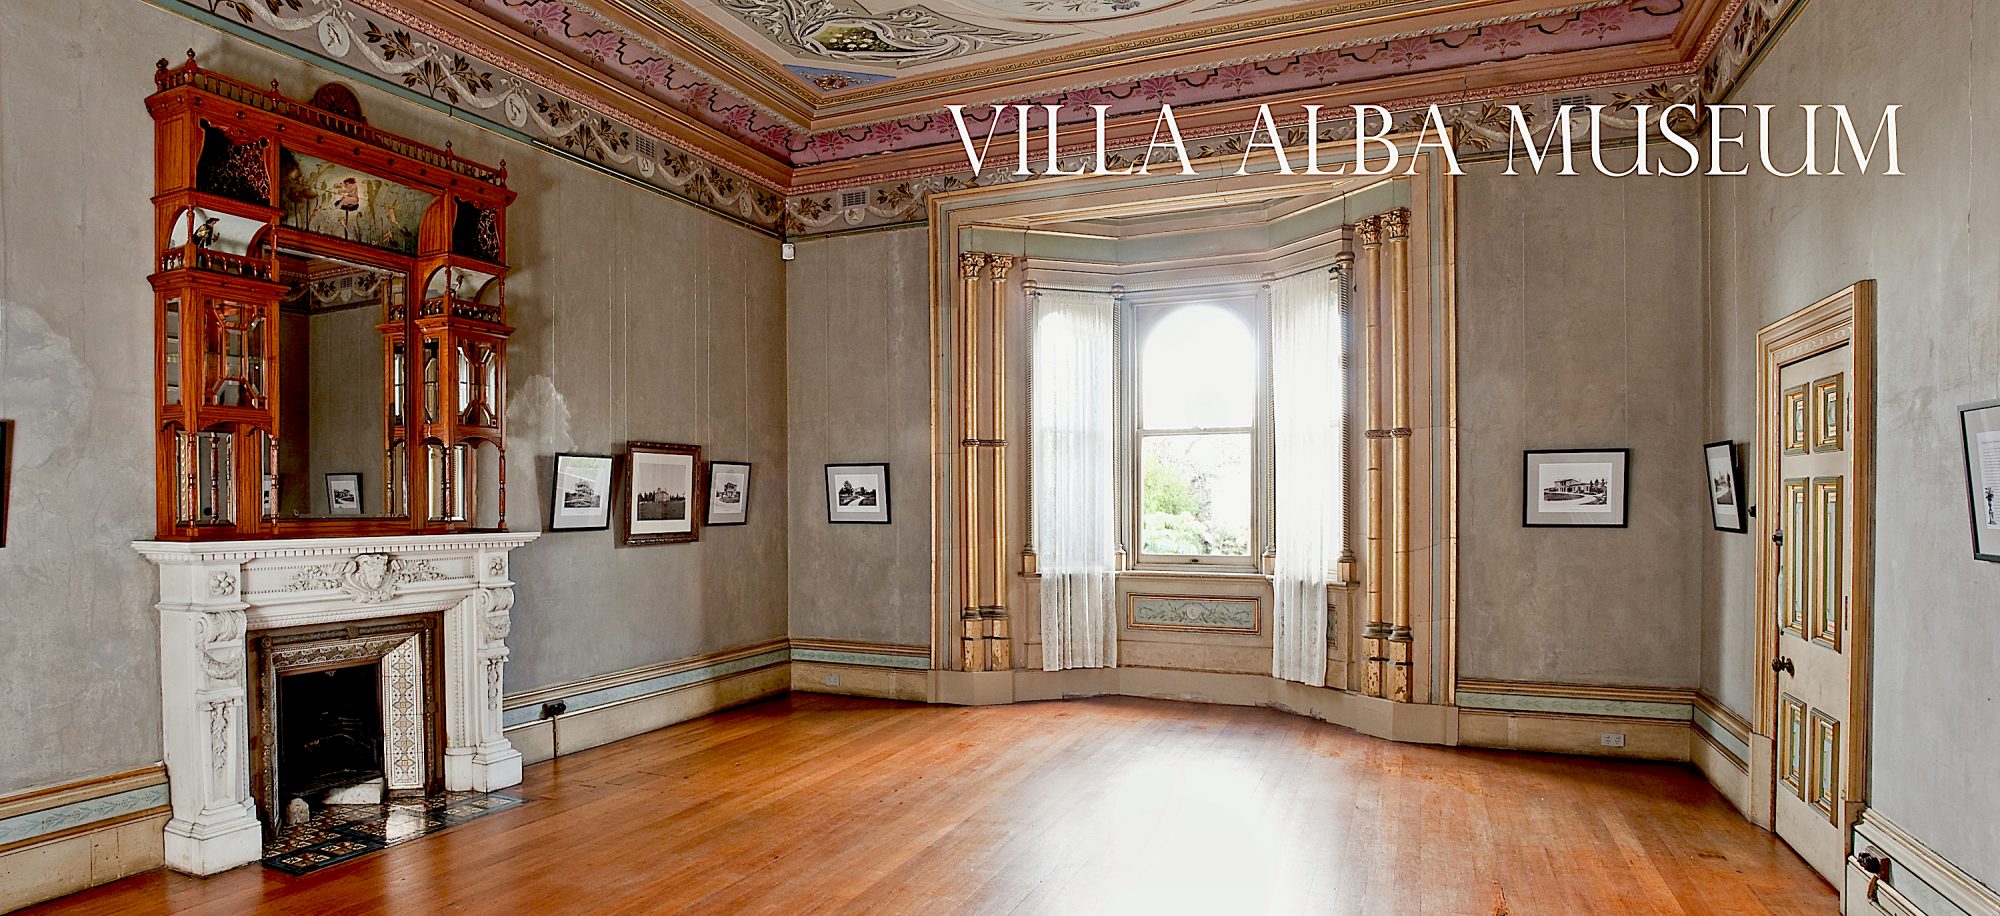 Villa Alba Museum